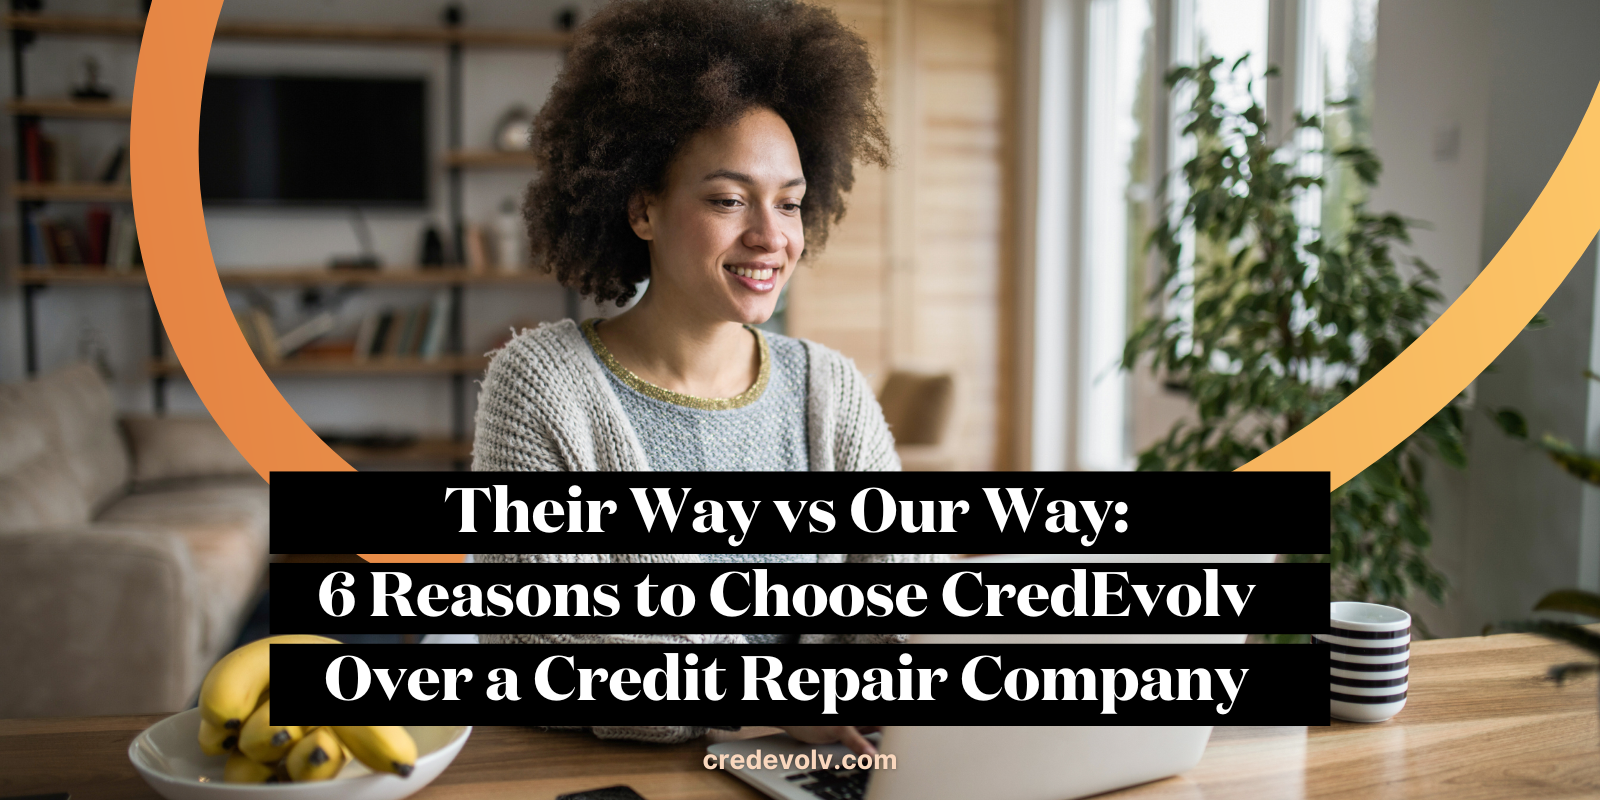 CredEvolv Blog - Featured Image - CredEvolv vs Credit Repair Companies